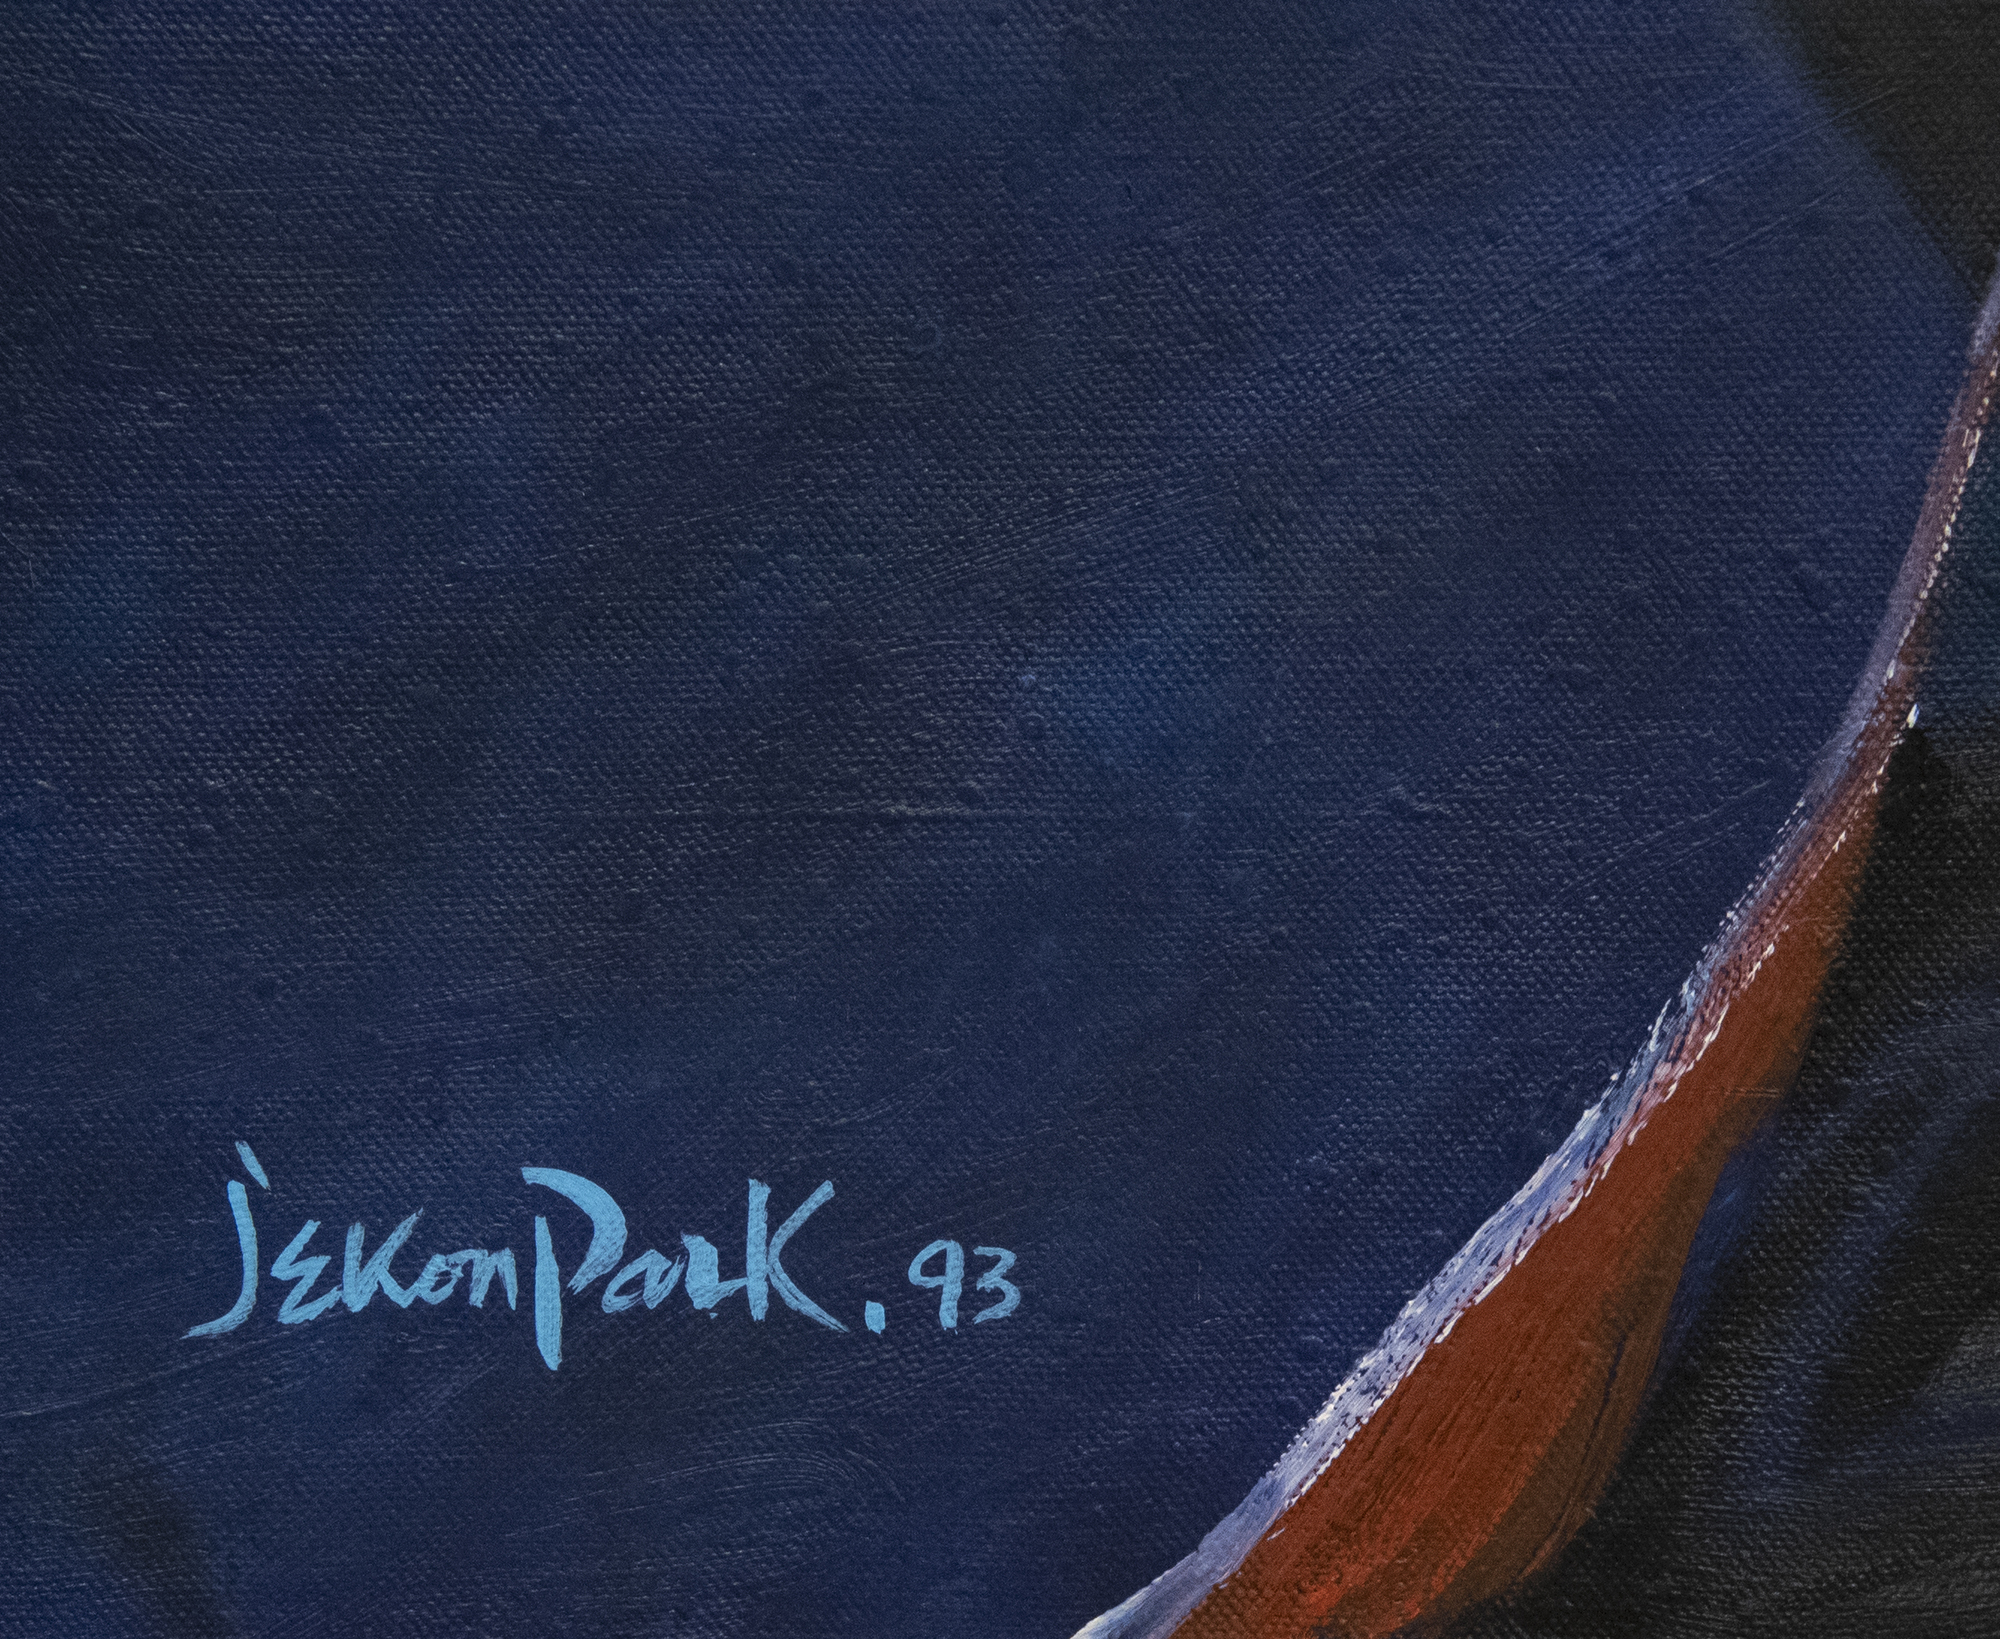 JAE KON PARK - Ohne Titel - Öl auf Leinwand - 36 x 45 1/2 Zoll